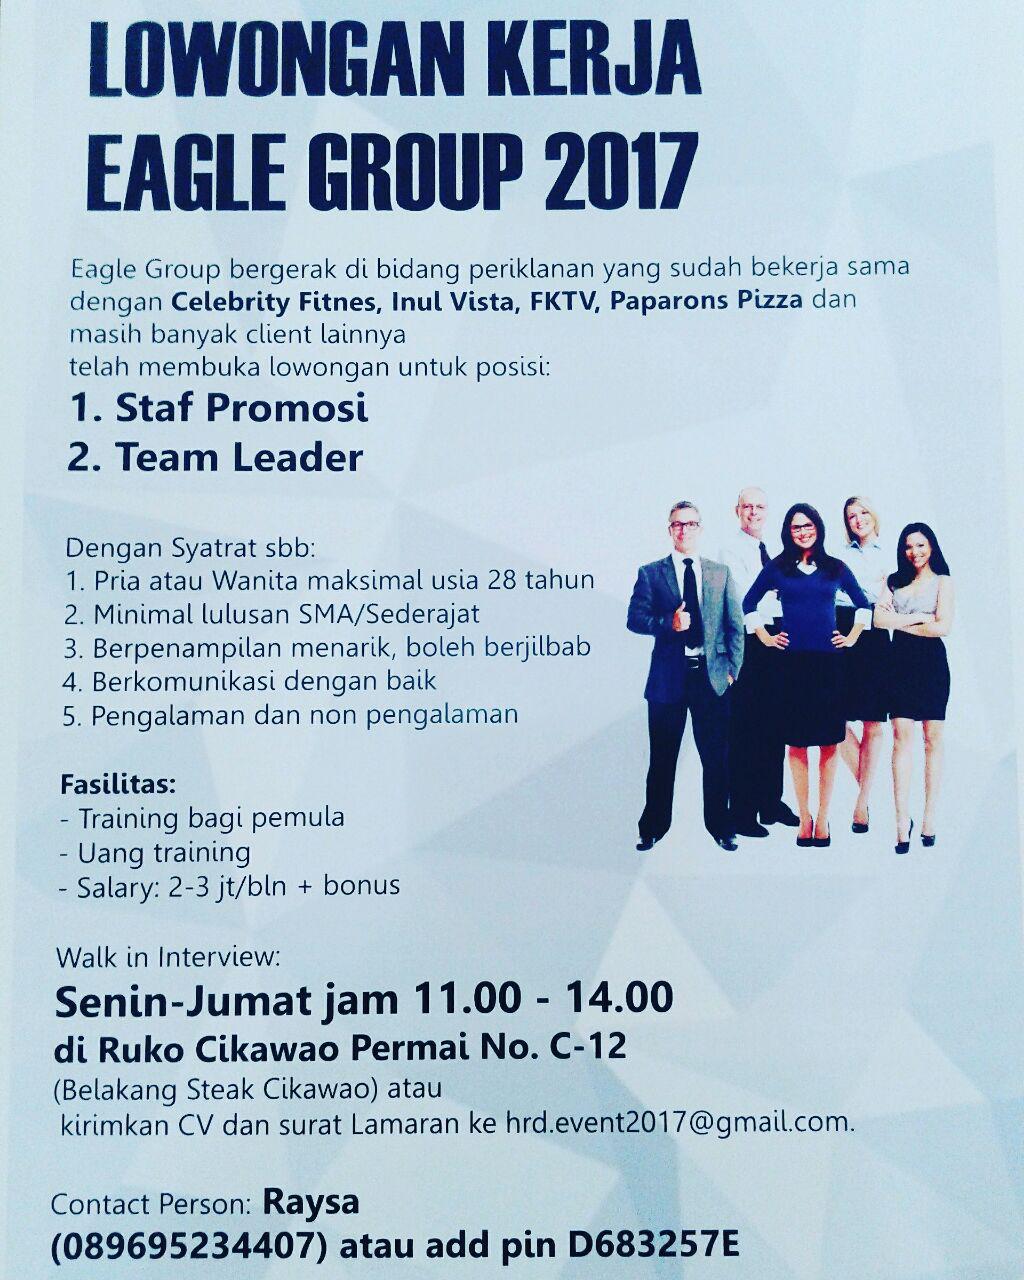 Lowongan Kerja Eagle Group Bandung Mei 2017 - Job Seeker